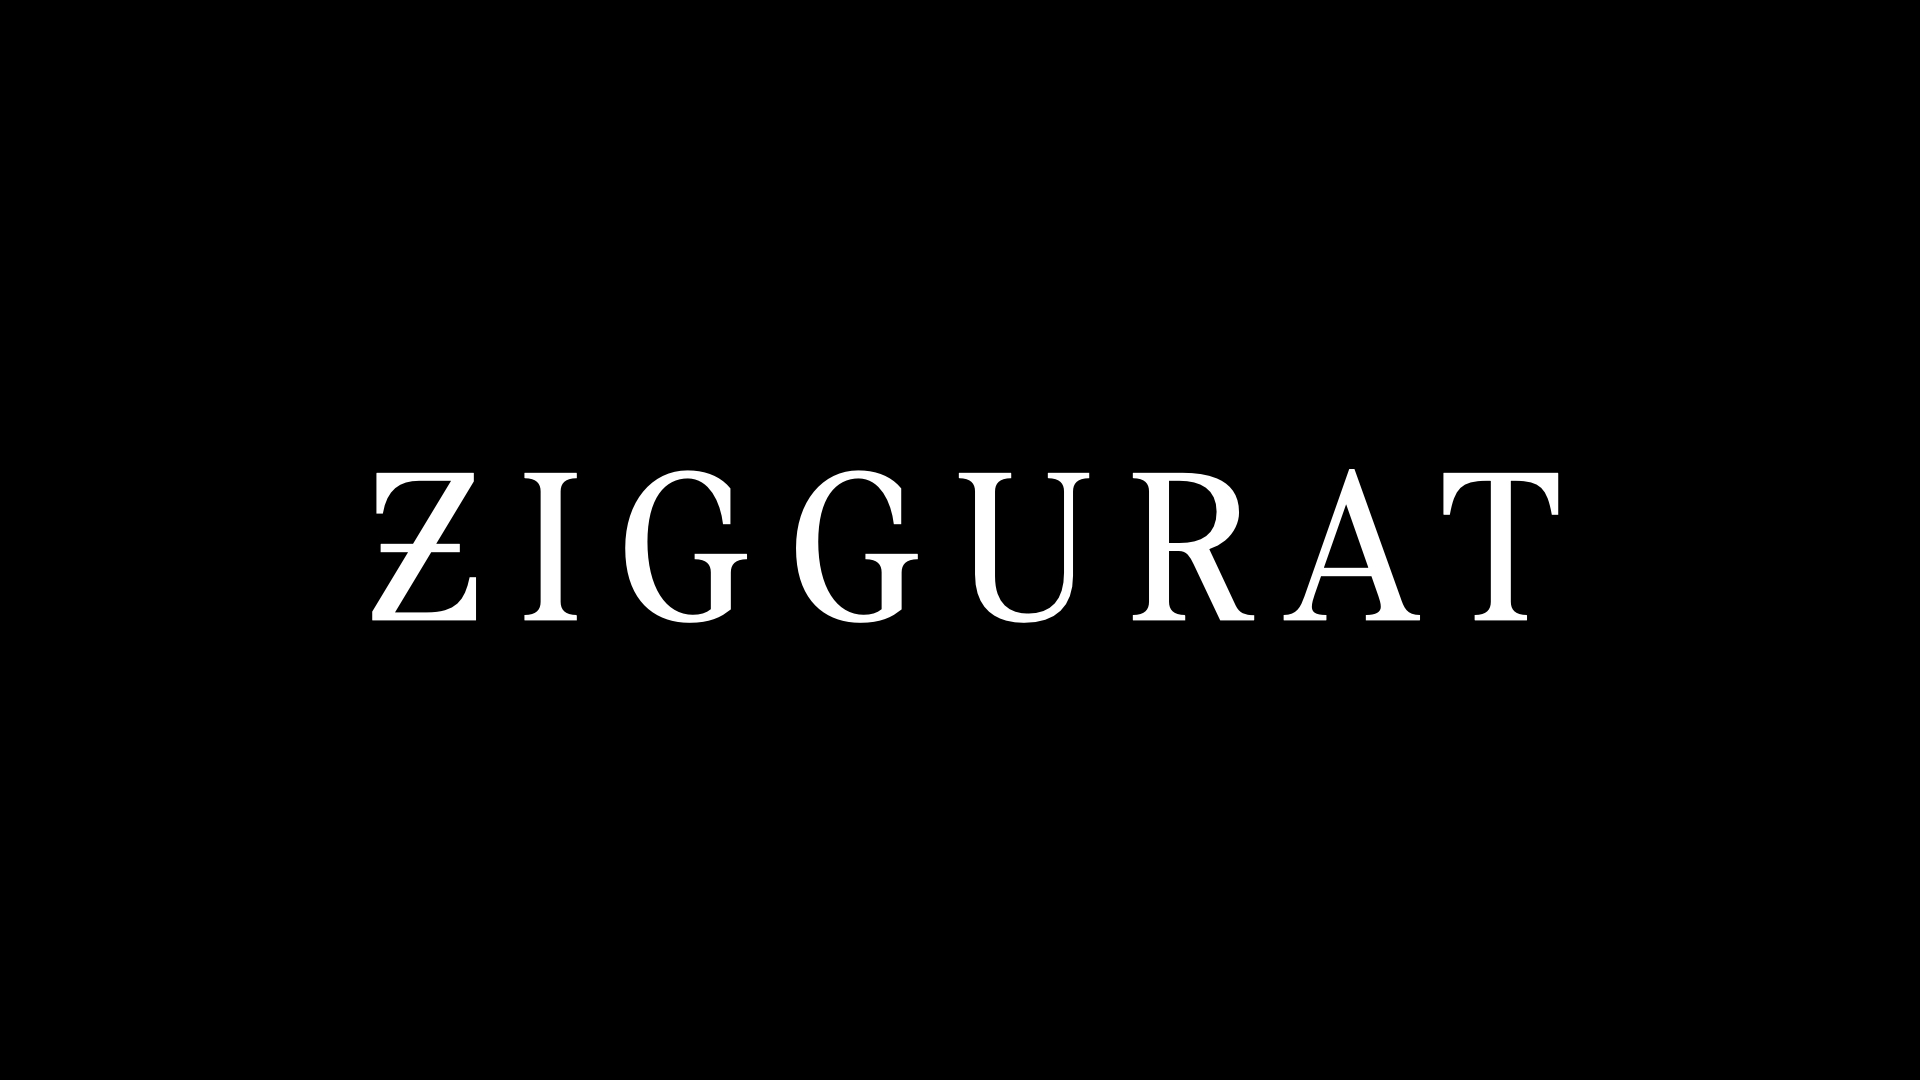 the_brand_ziggurat_copy028.jpg